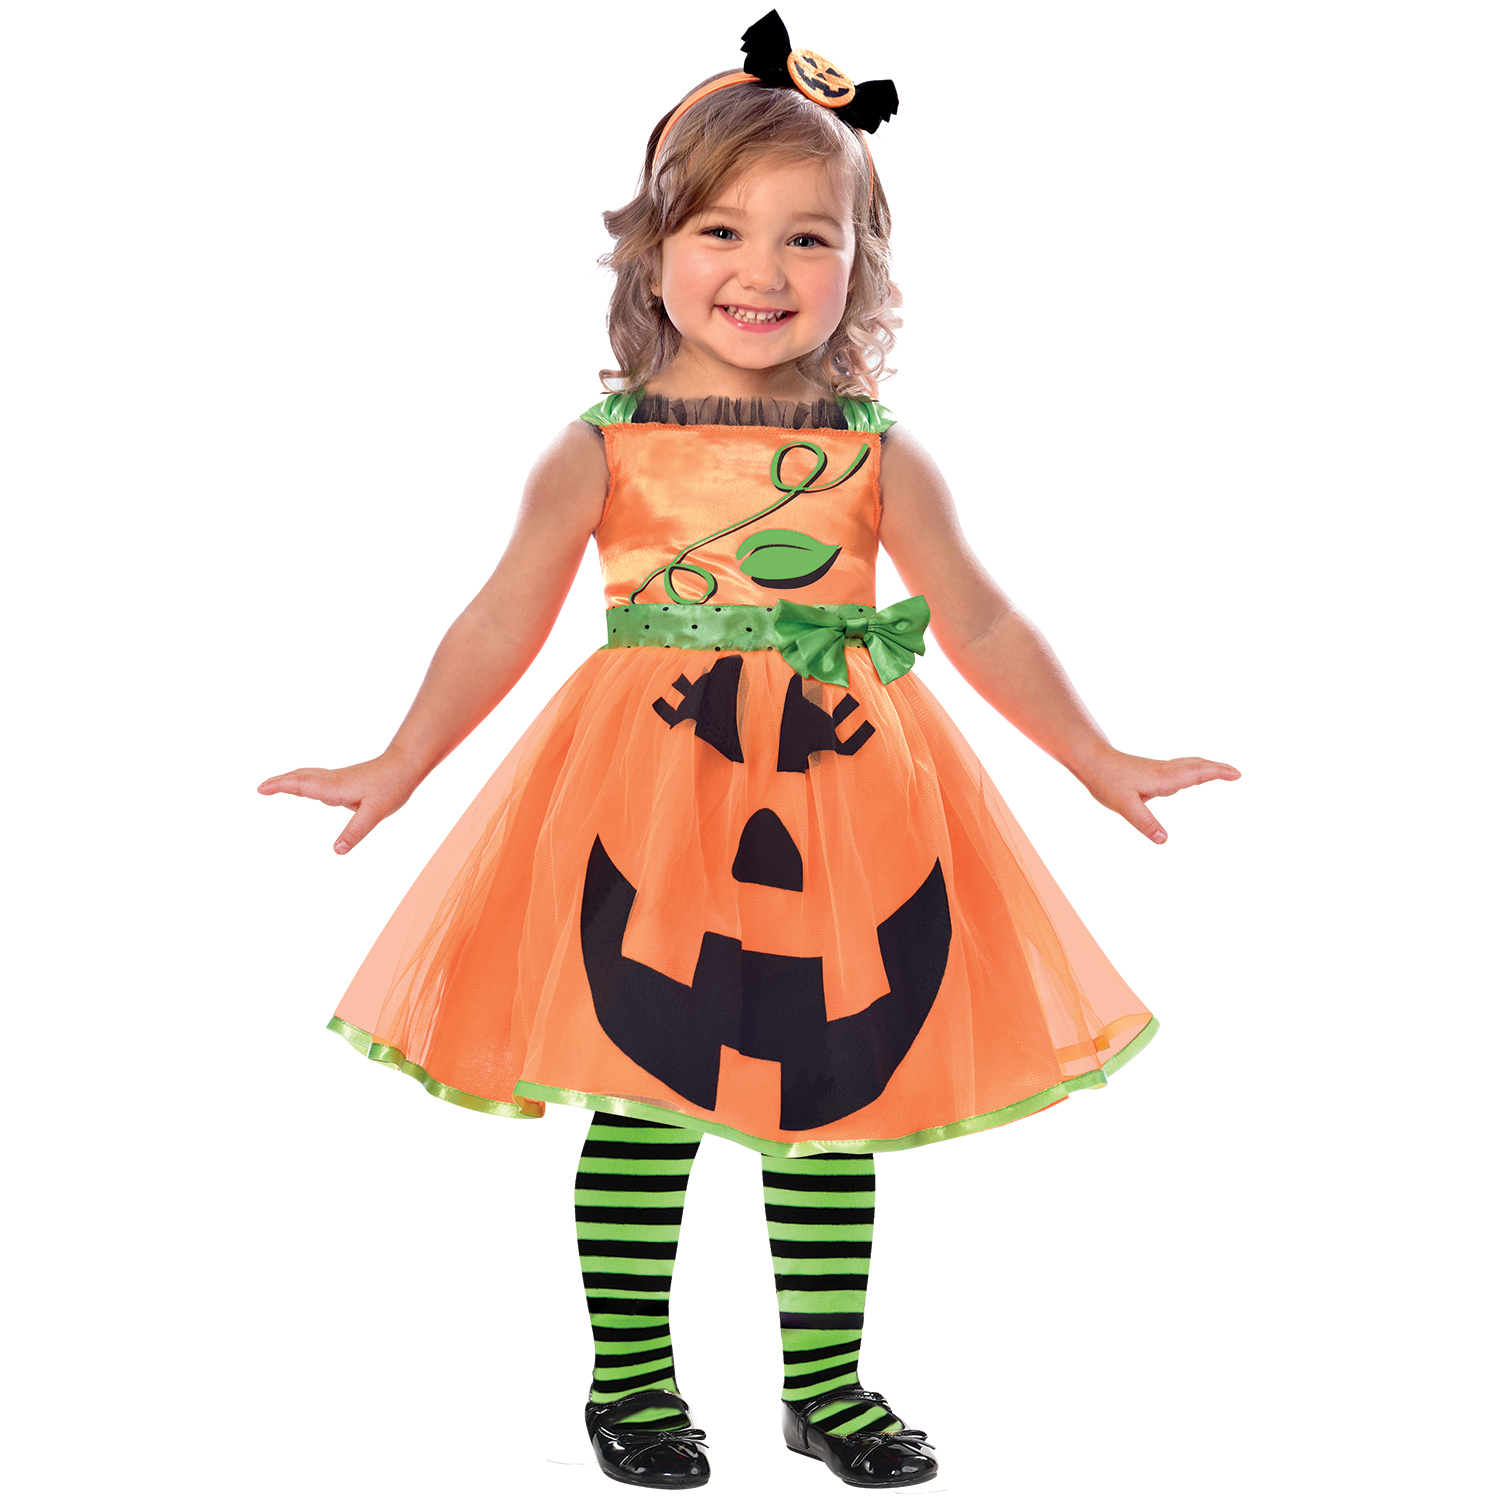 Cute Pumpkin Costume - Age 2-3 Years - 1 PC : Amscan International